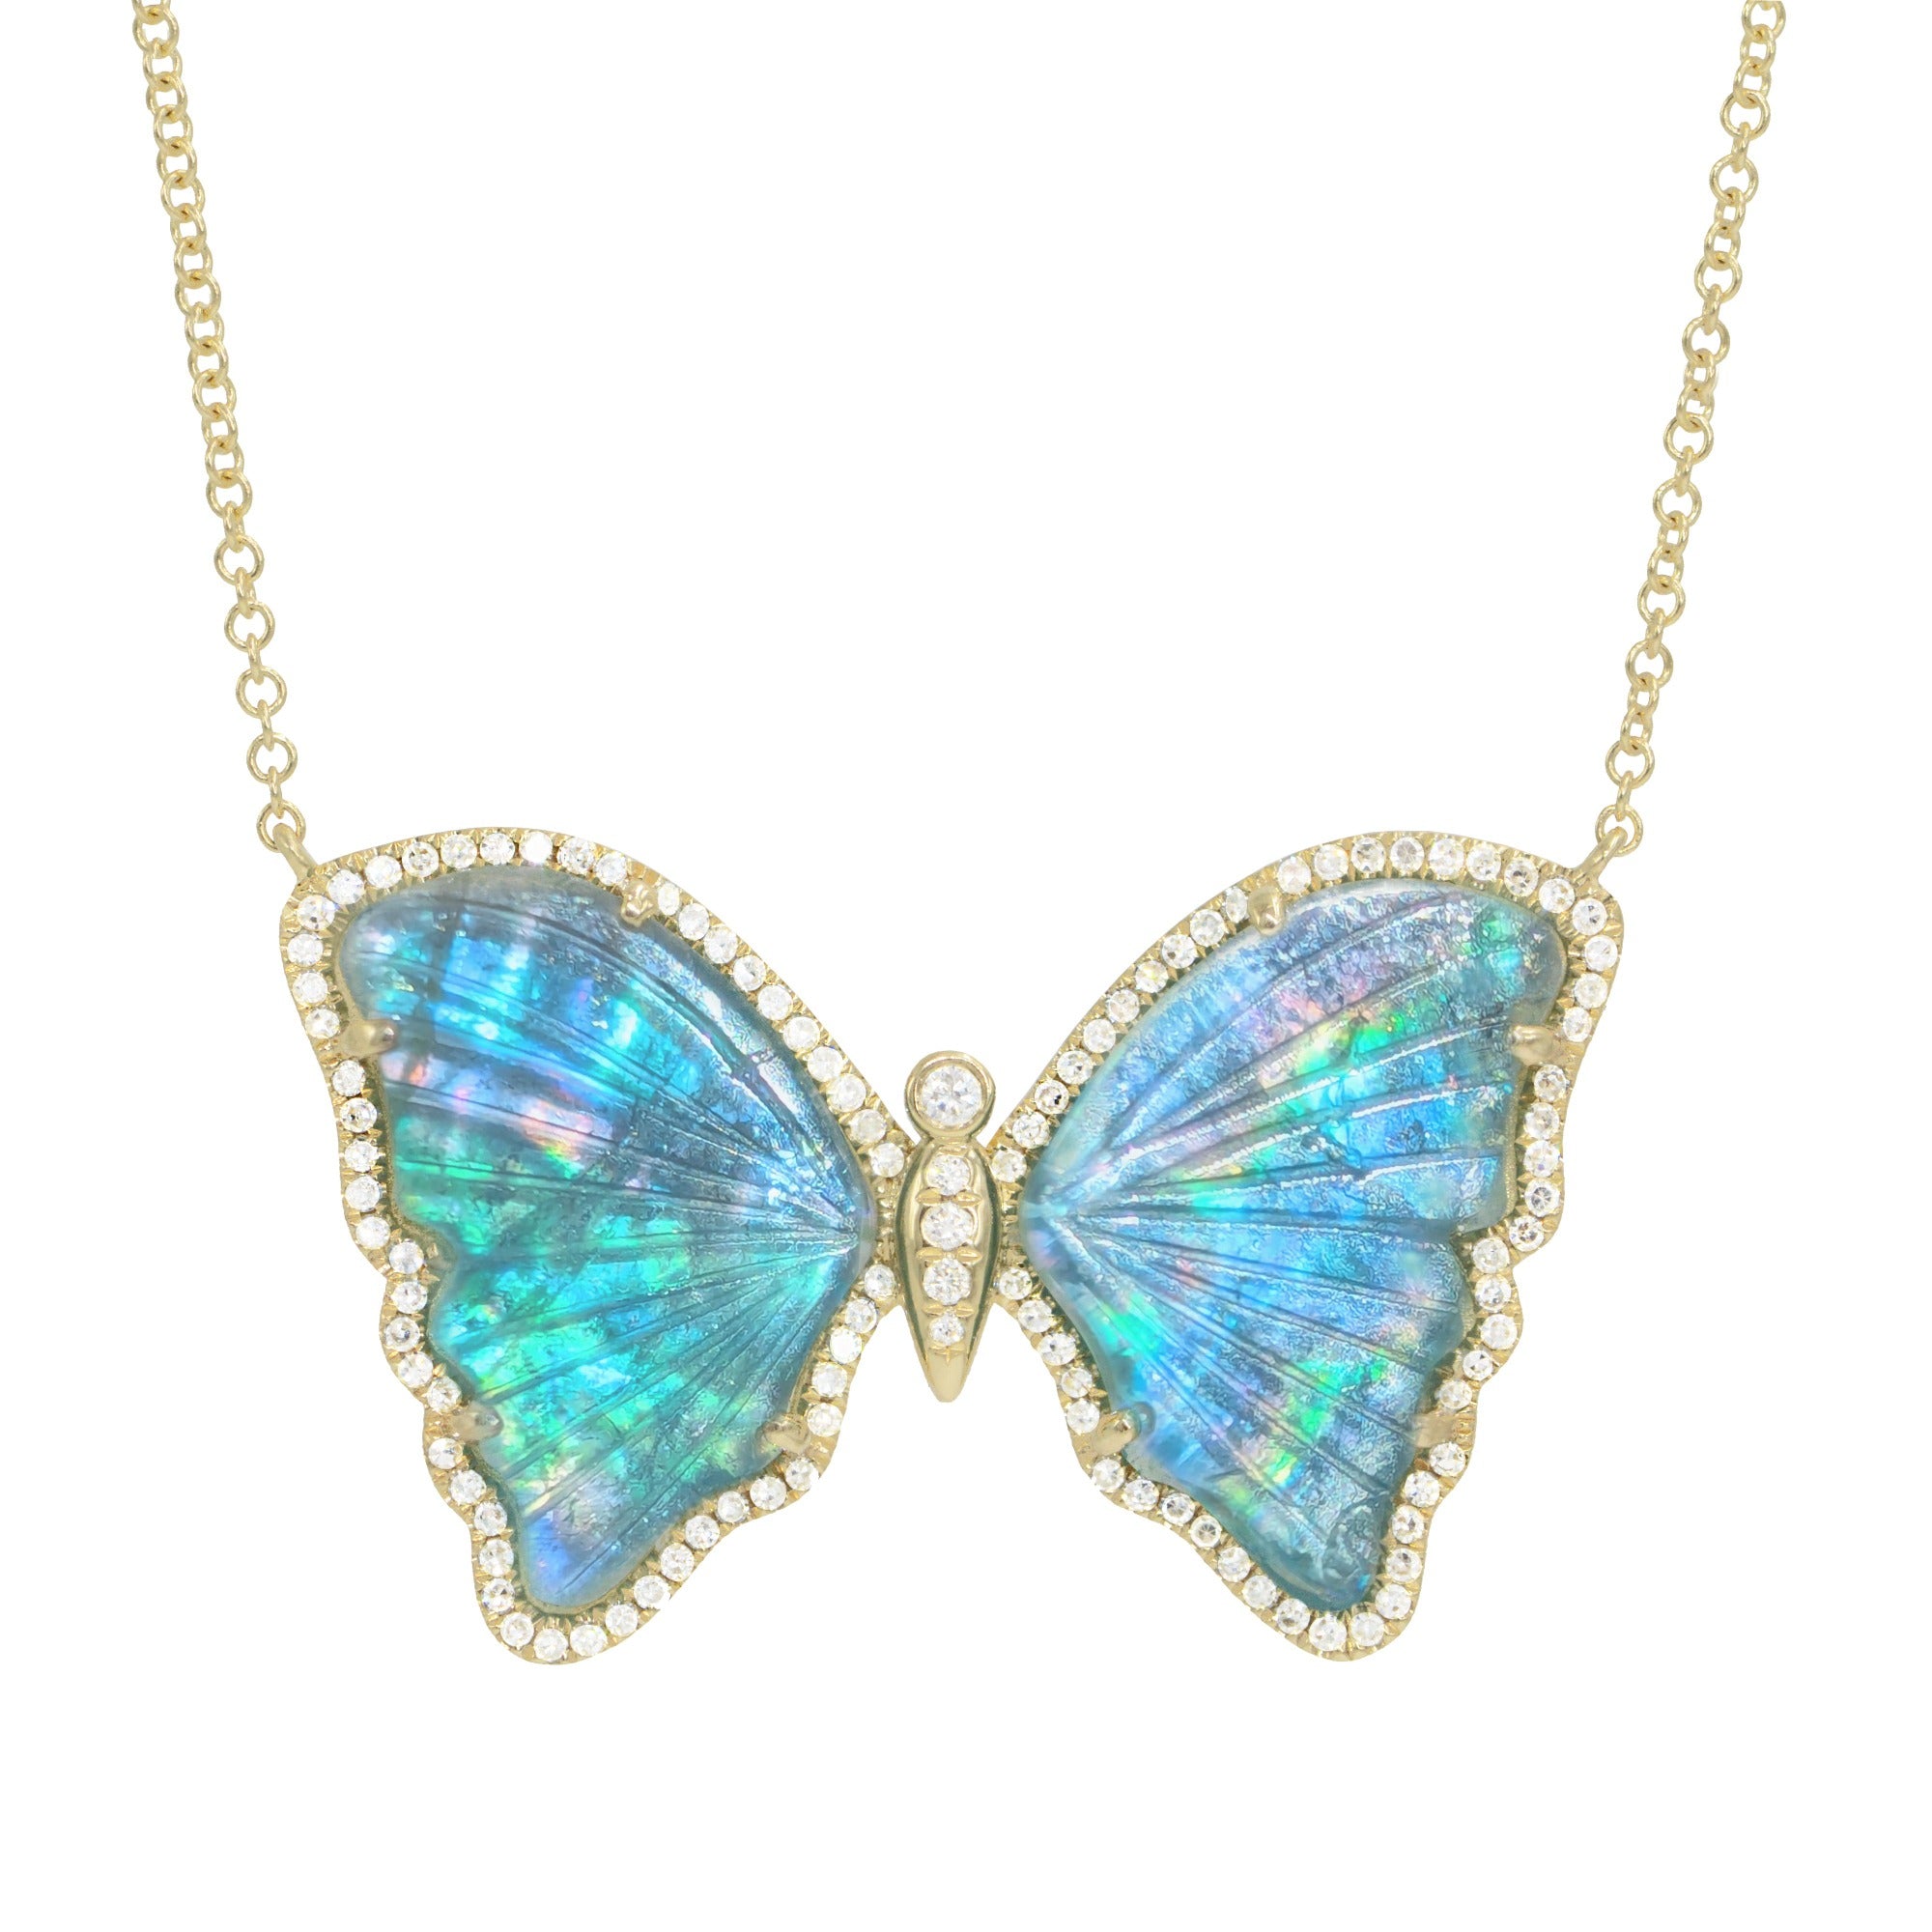 Large blue enamel butterfly necklace Handpainted bib necklace Wearable art  statement jewelry gift for her | Monarch butterfly necklace, Painted  jewelry, Necklace designs